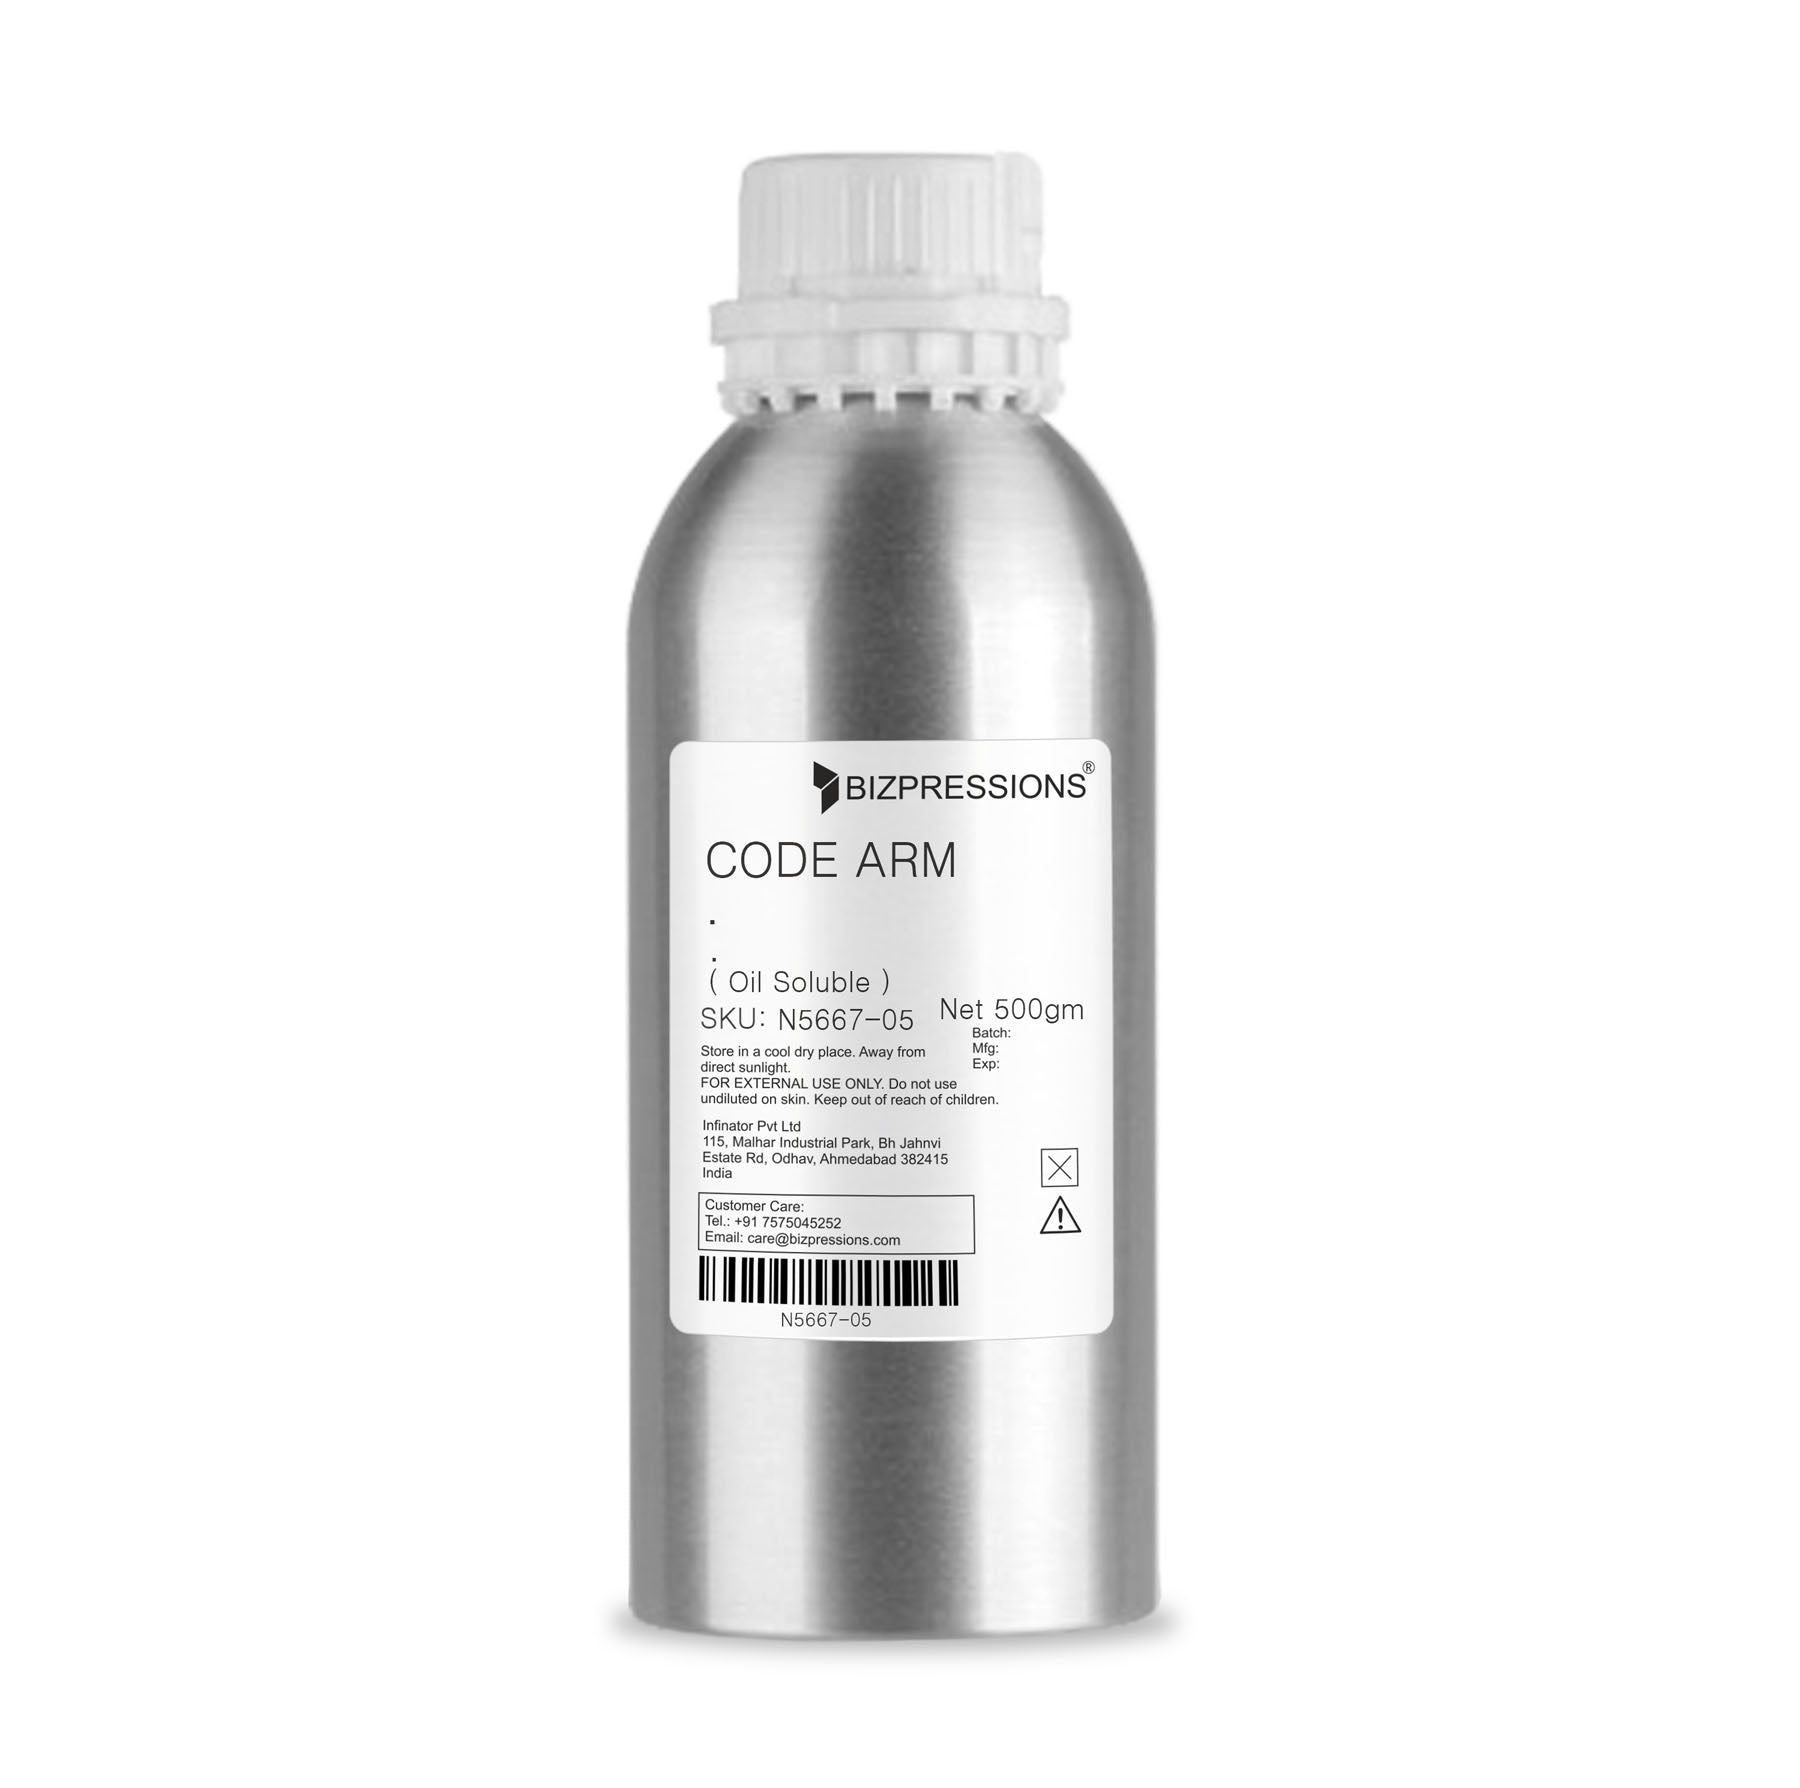 CODE ARM - Fragrance ( Oil Soluble ) - 500 gm